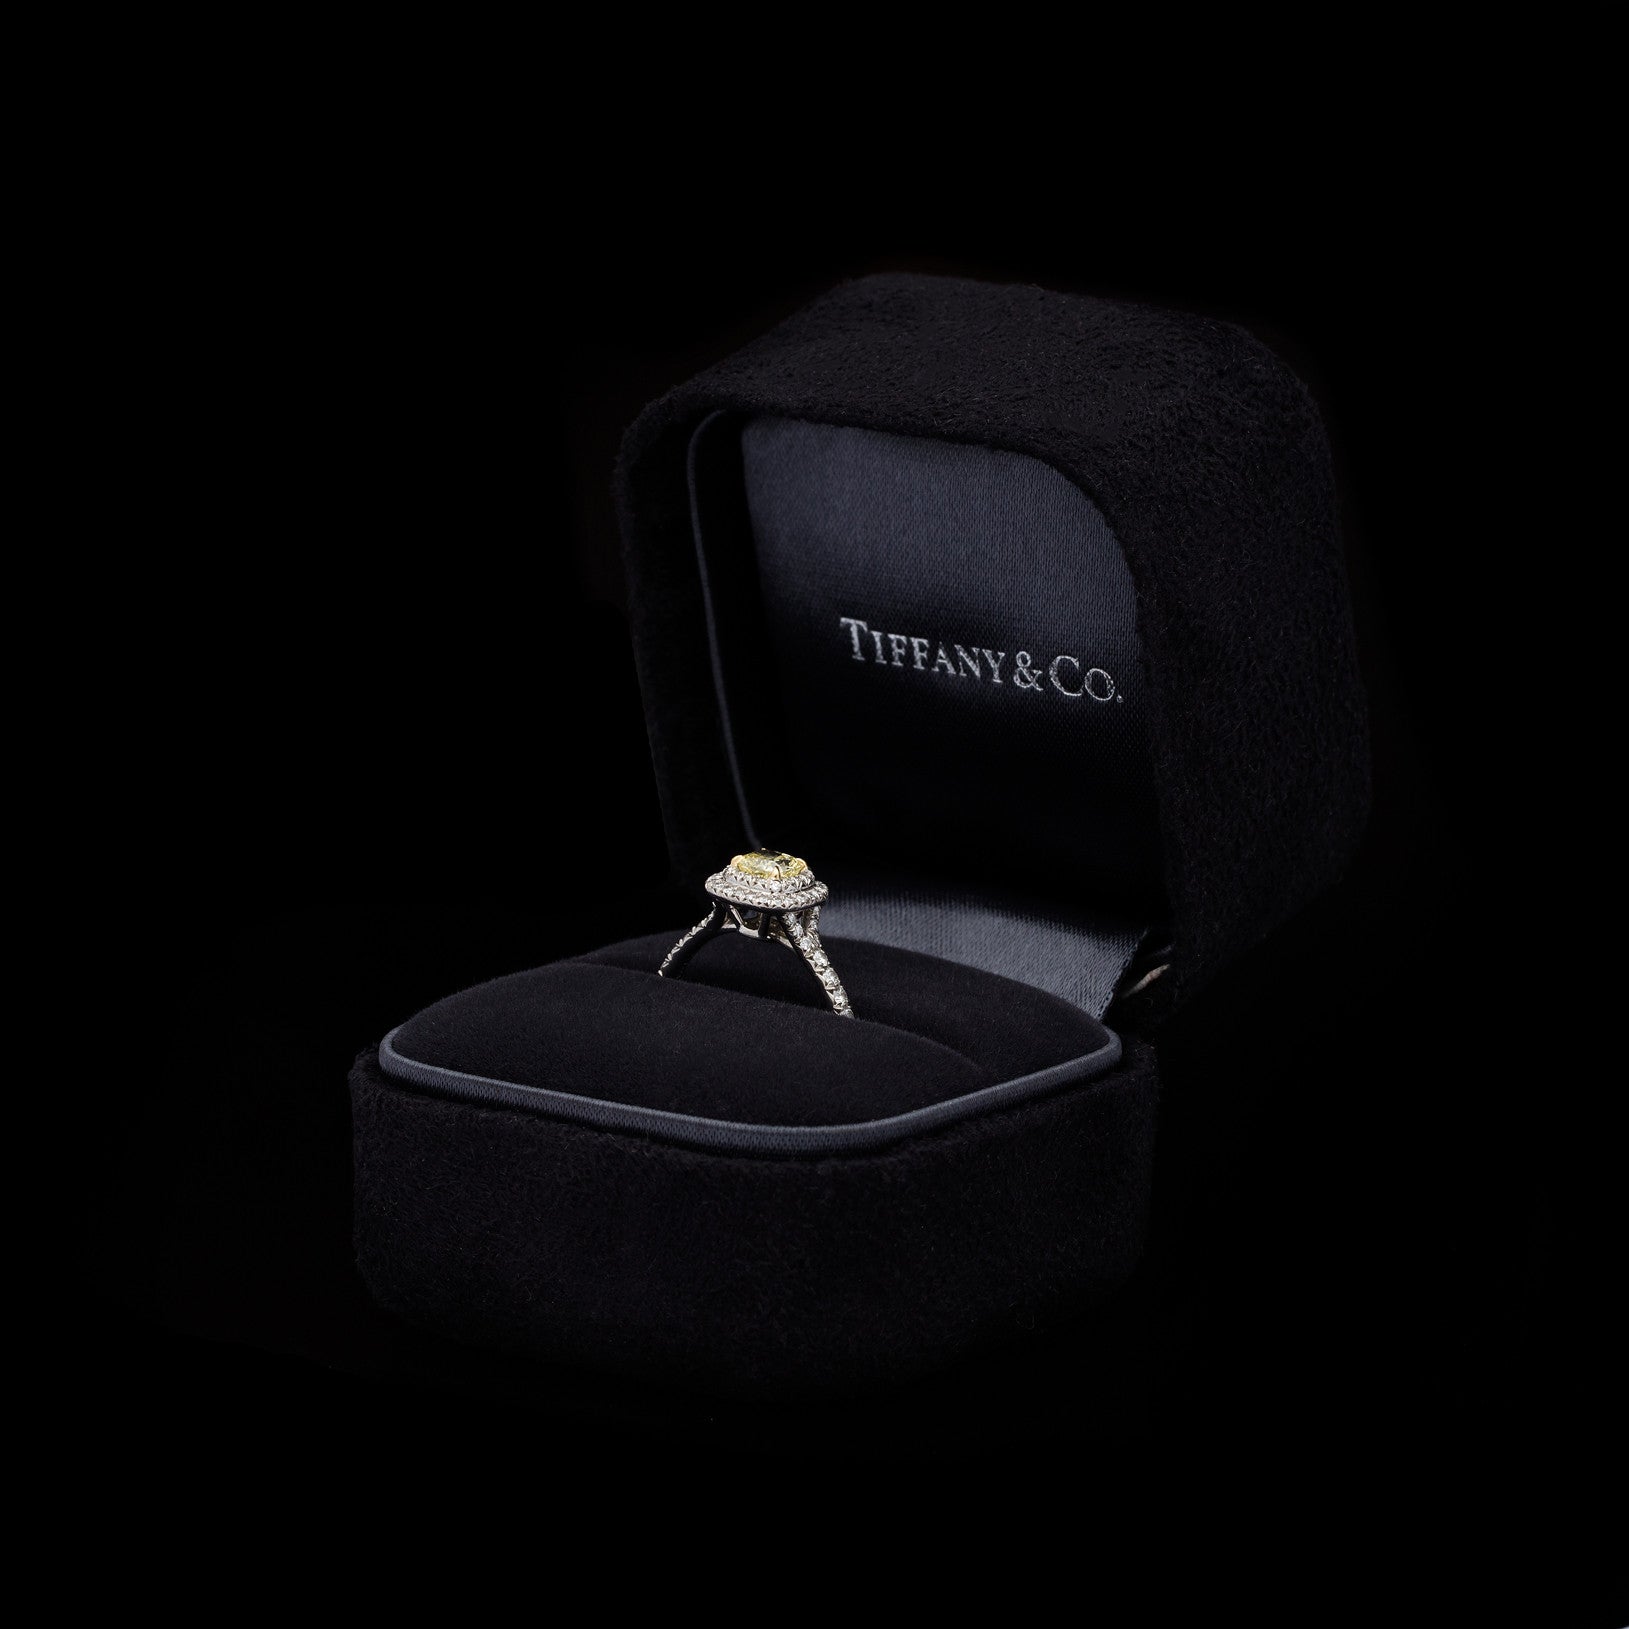 Tiffany & Co. Fancy Intense Yellow Diamond Ring - 66mint Fine Estate Jewelry